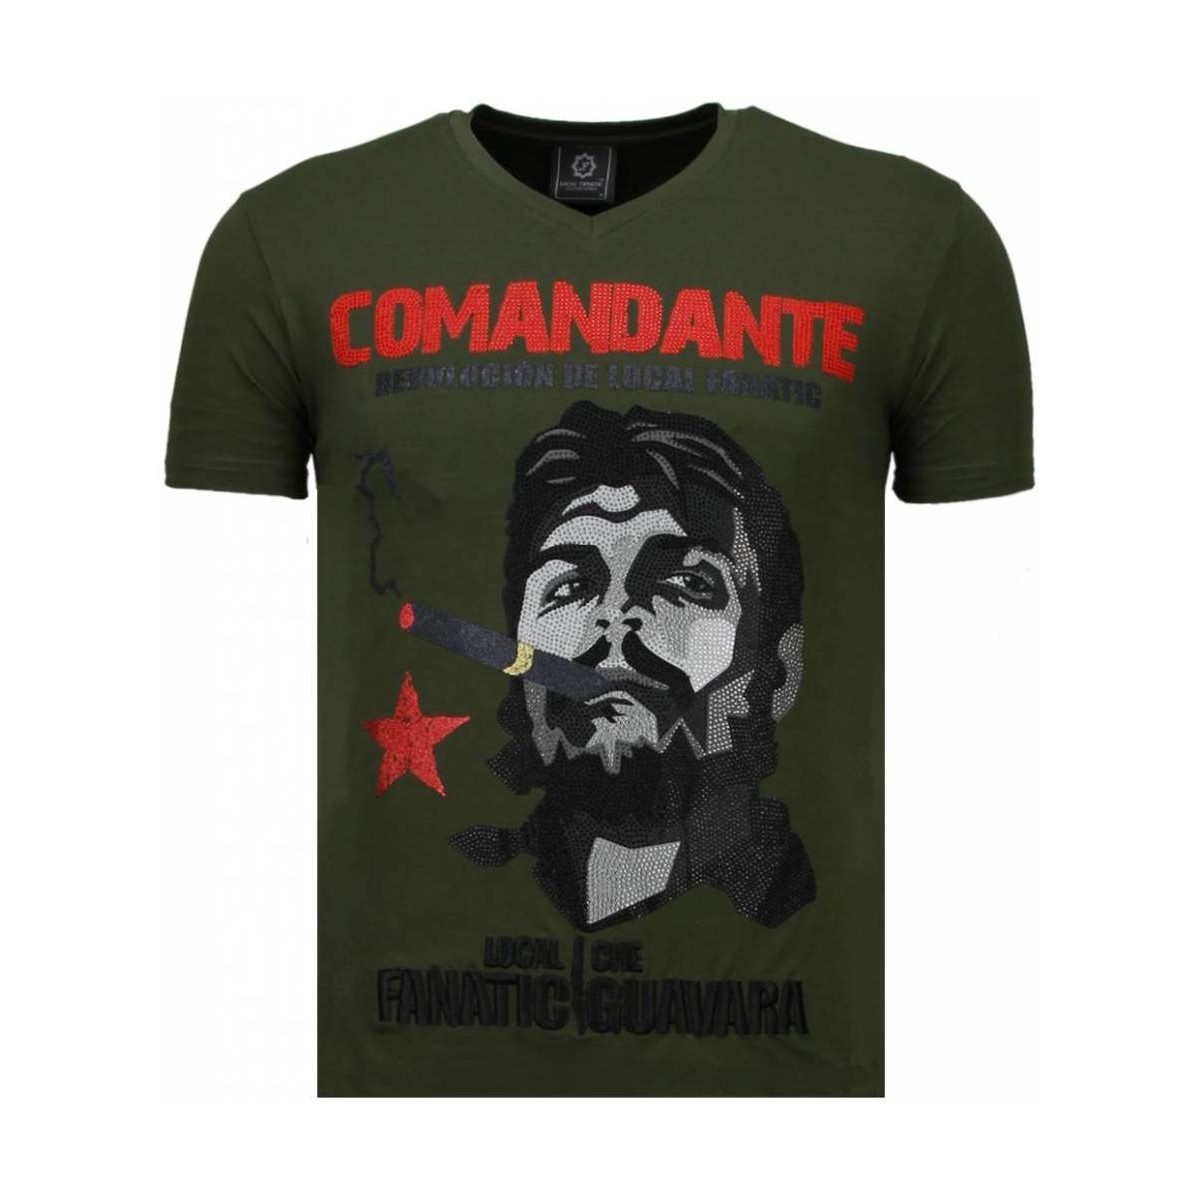 textil Herr T-shirts Local Fanatic Che Guevara Codante Rhinestone Grön